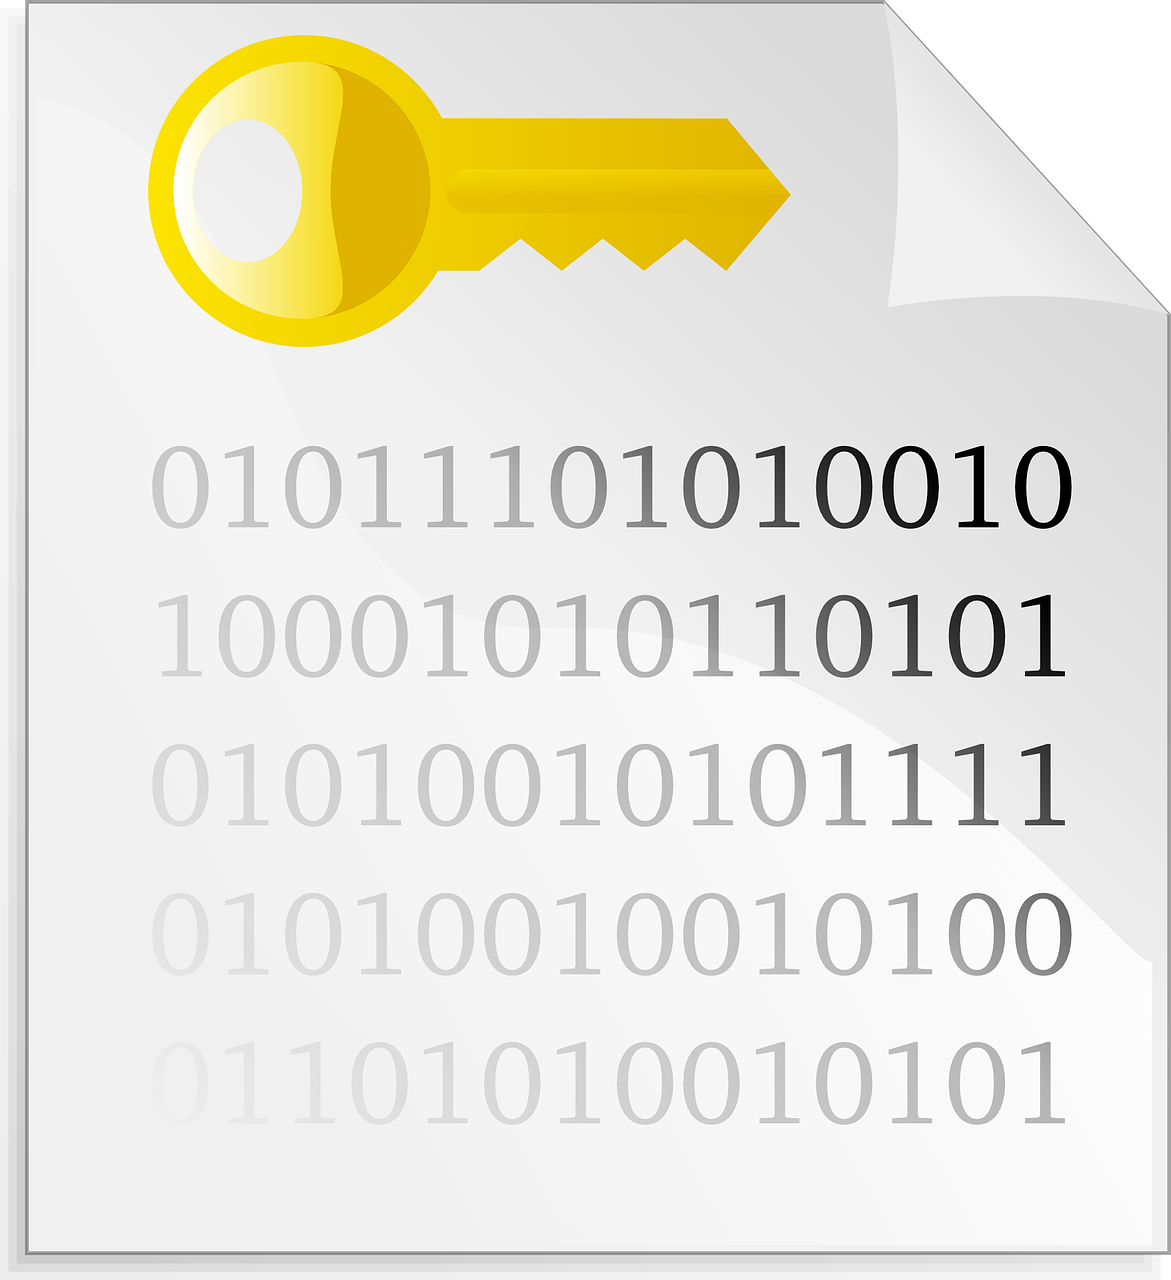 Encryption Keys